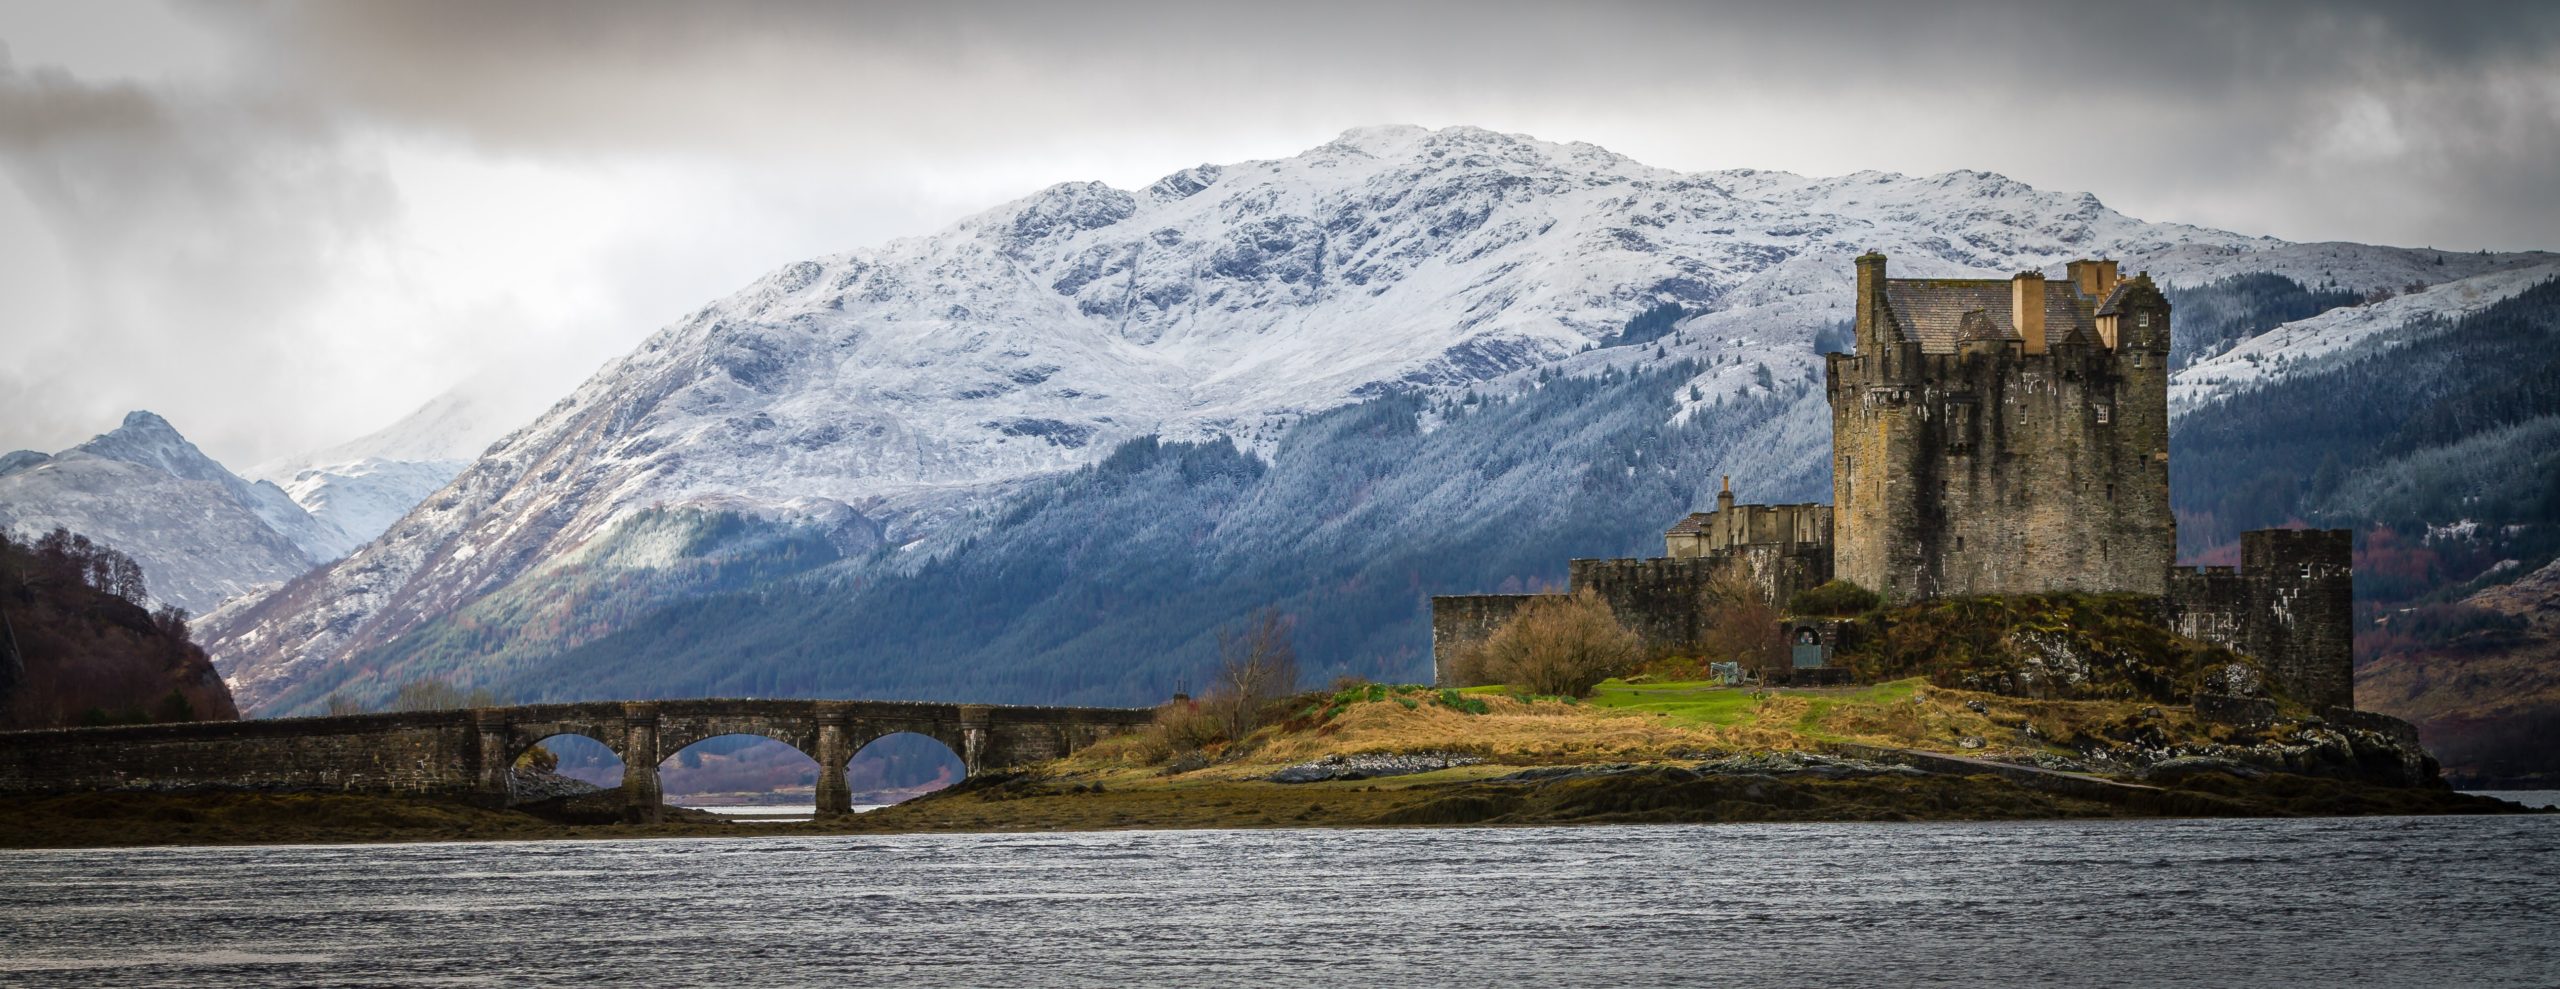 A landscape photograph of the Eilean Donan Castle wedding venue in the Scottish Highlands.